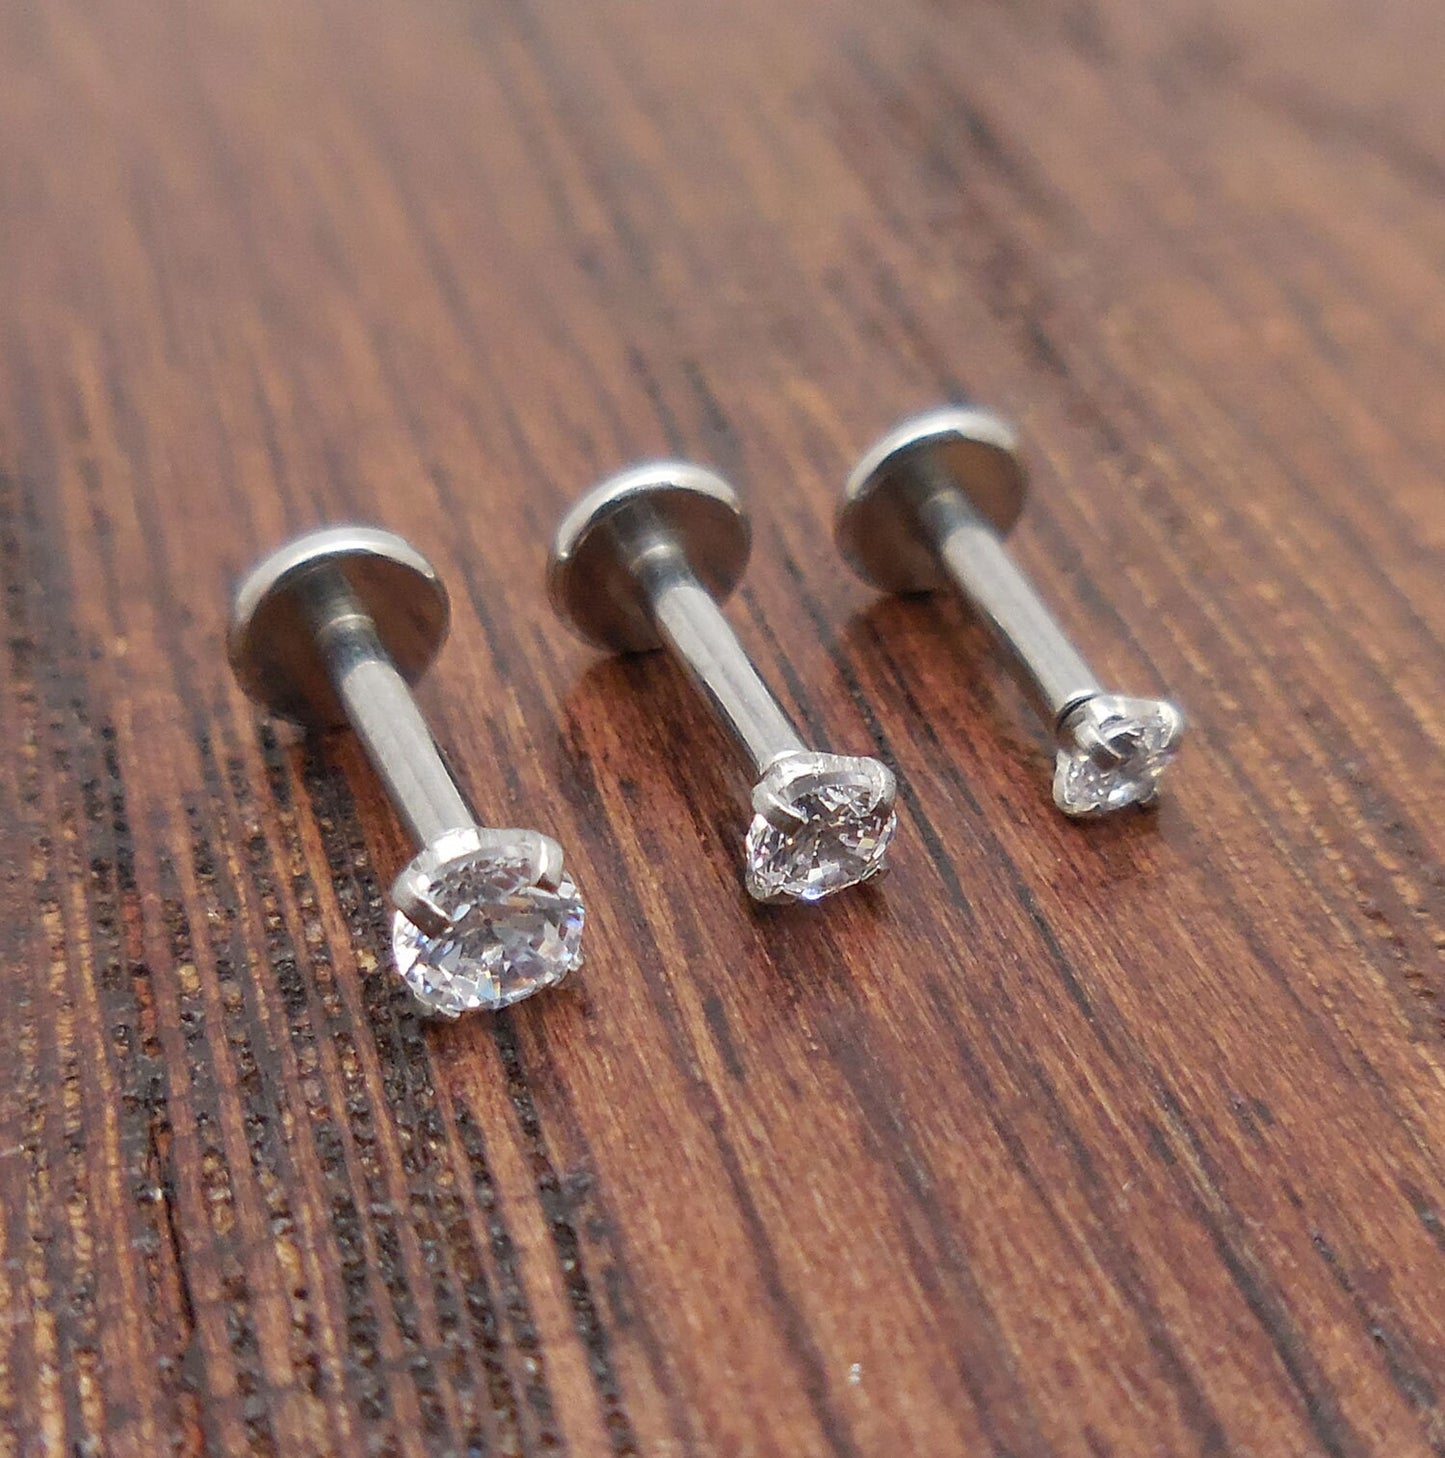 16g Tragus Threadless Push Pin Nose Ring Cartilage Earrings